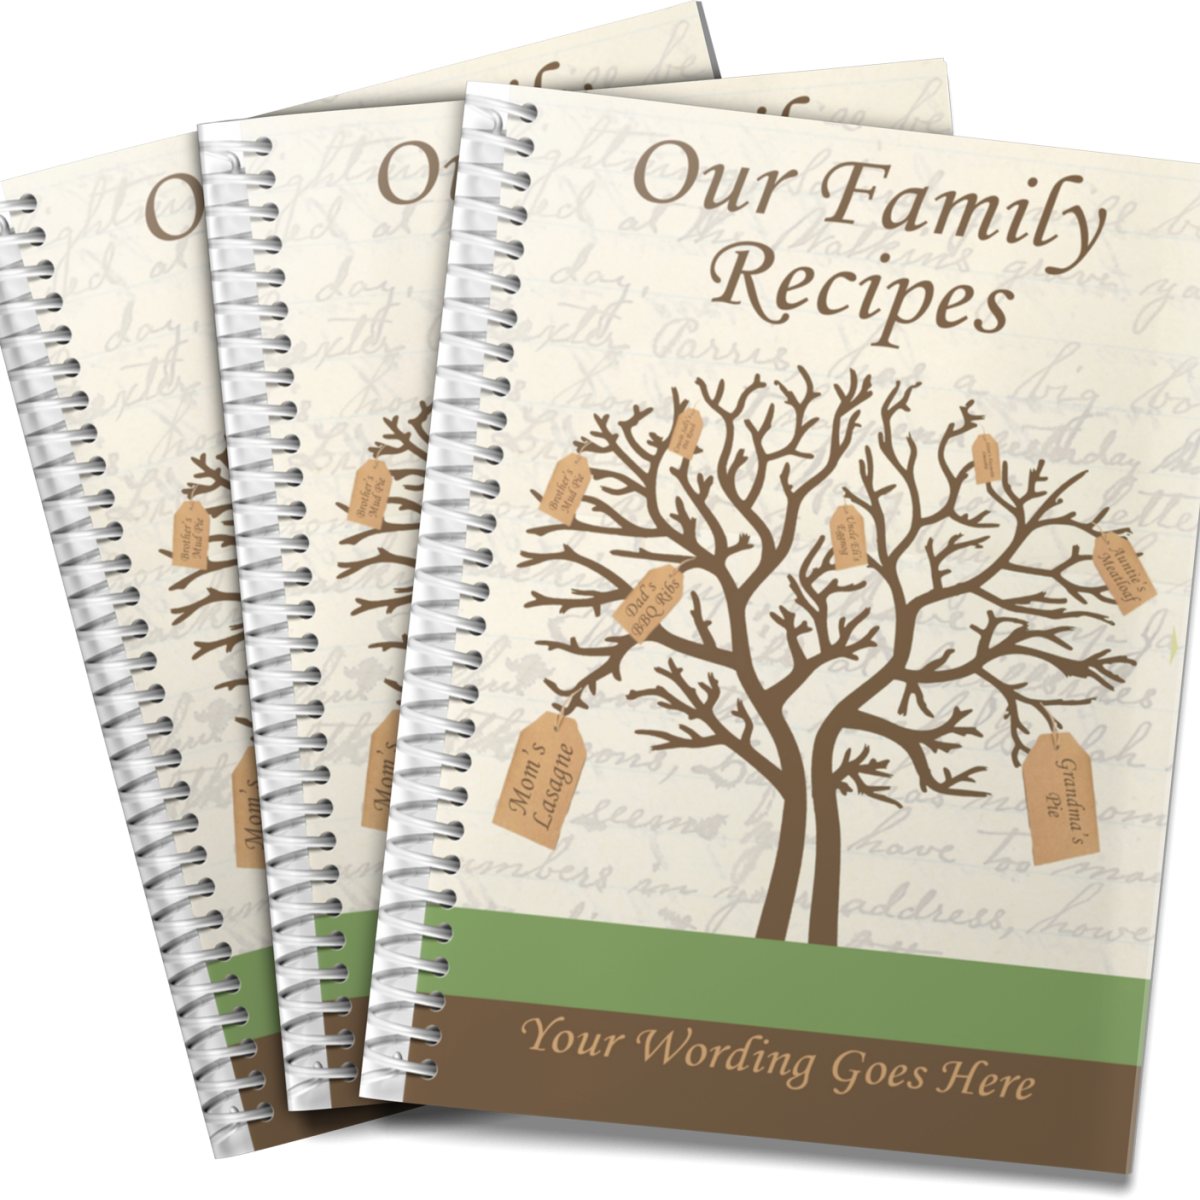 Our Family Recipes [Book]